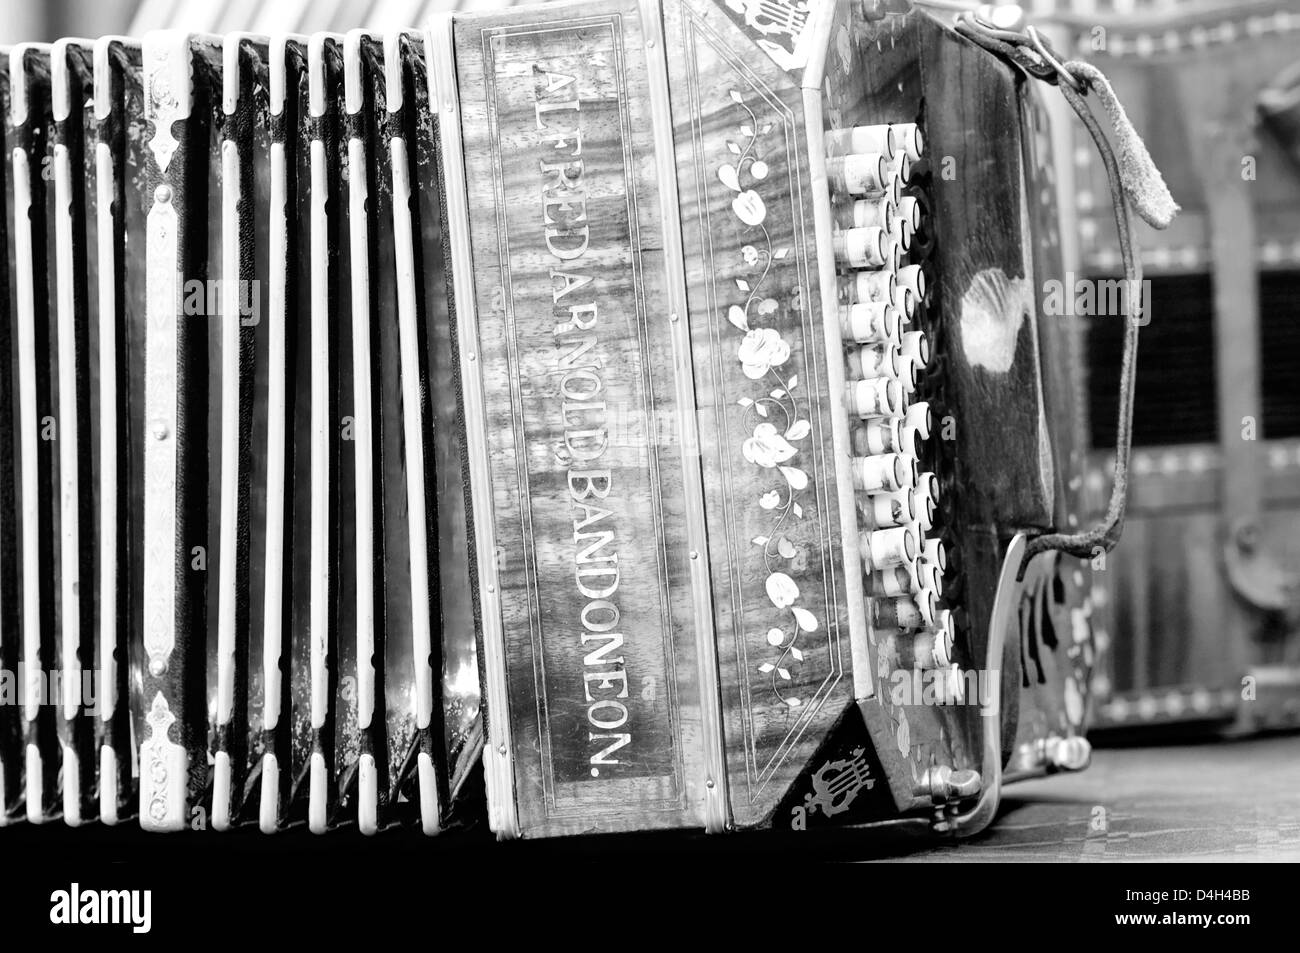 Bandoneon, Traditional Tango Musical Instrument Stock Photo